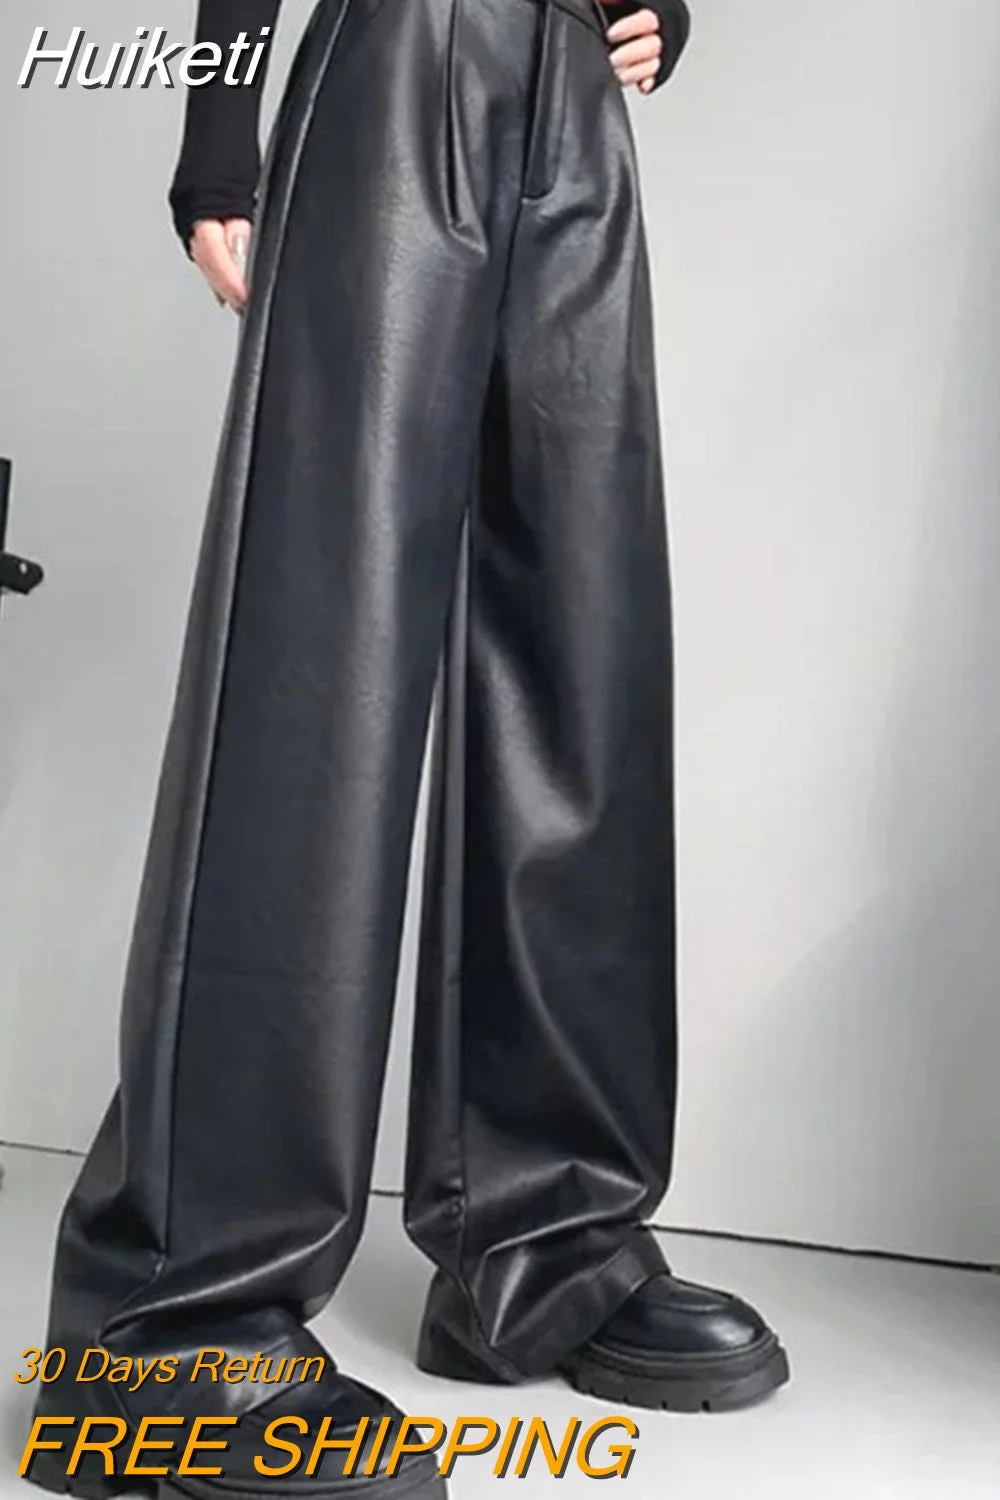 Huiketi PU Leather Pants Women Black Fashion Hight Waist Straight Faux Leater Trousers Chic Autumn Winter Loose Streetwear Pants